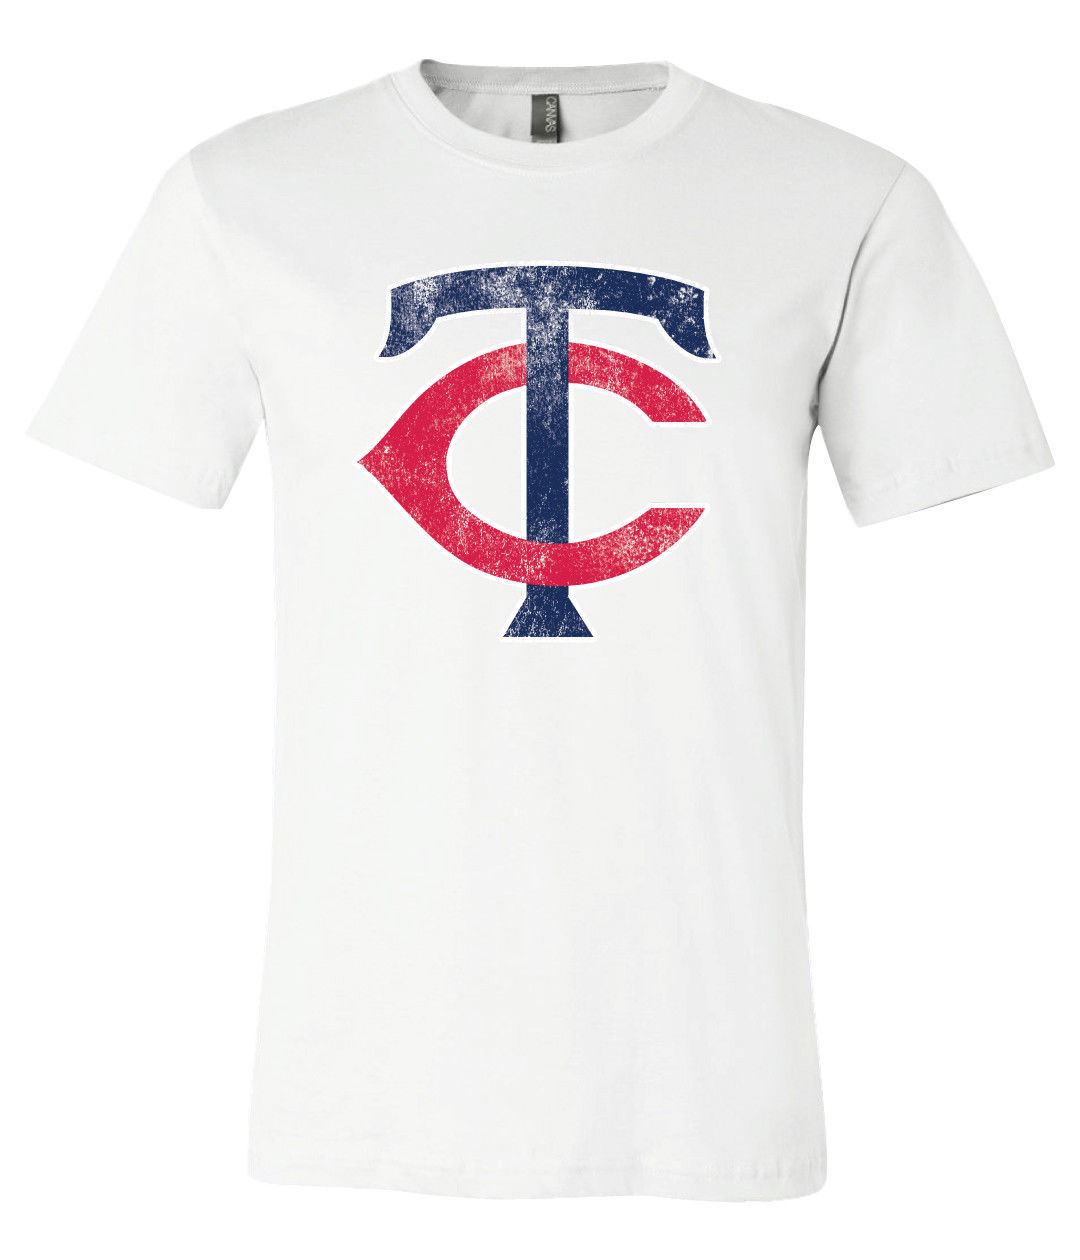 Minnesota Twins TC logo Distressed Vintage logo T-shirt 6 Sizes S